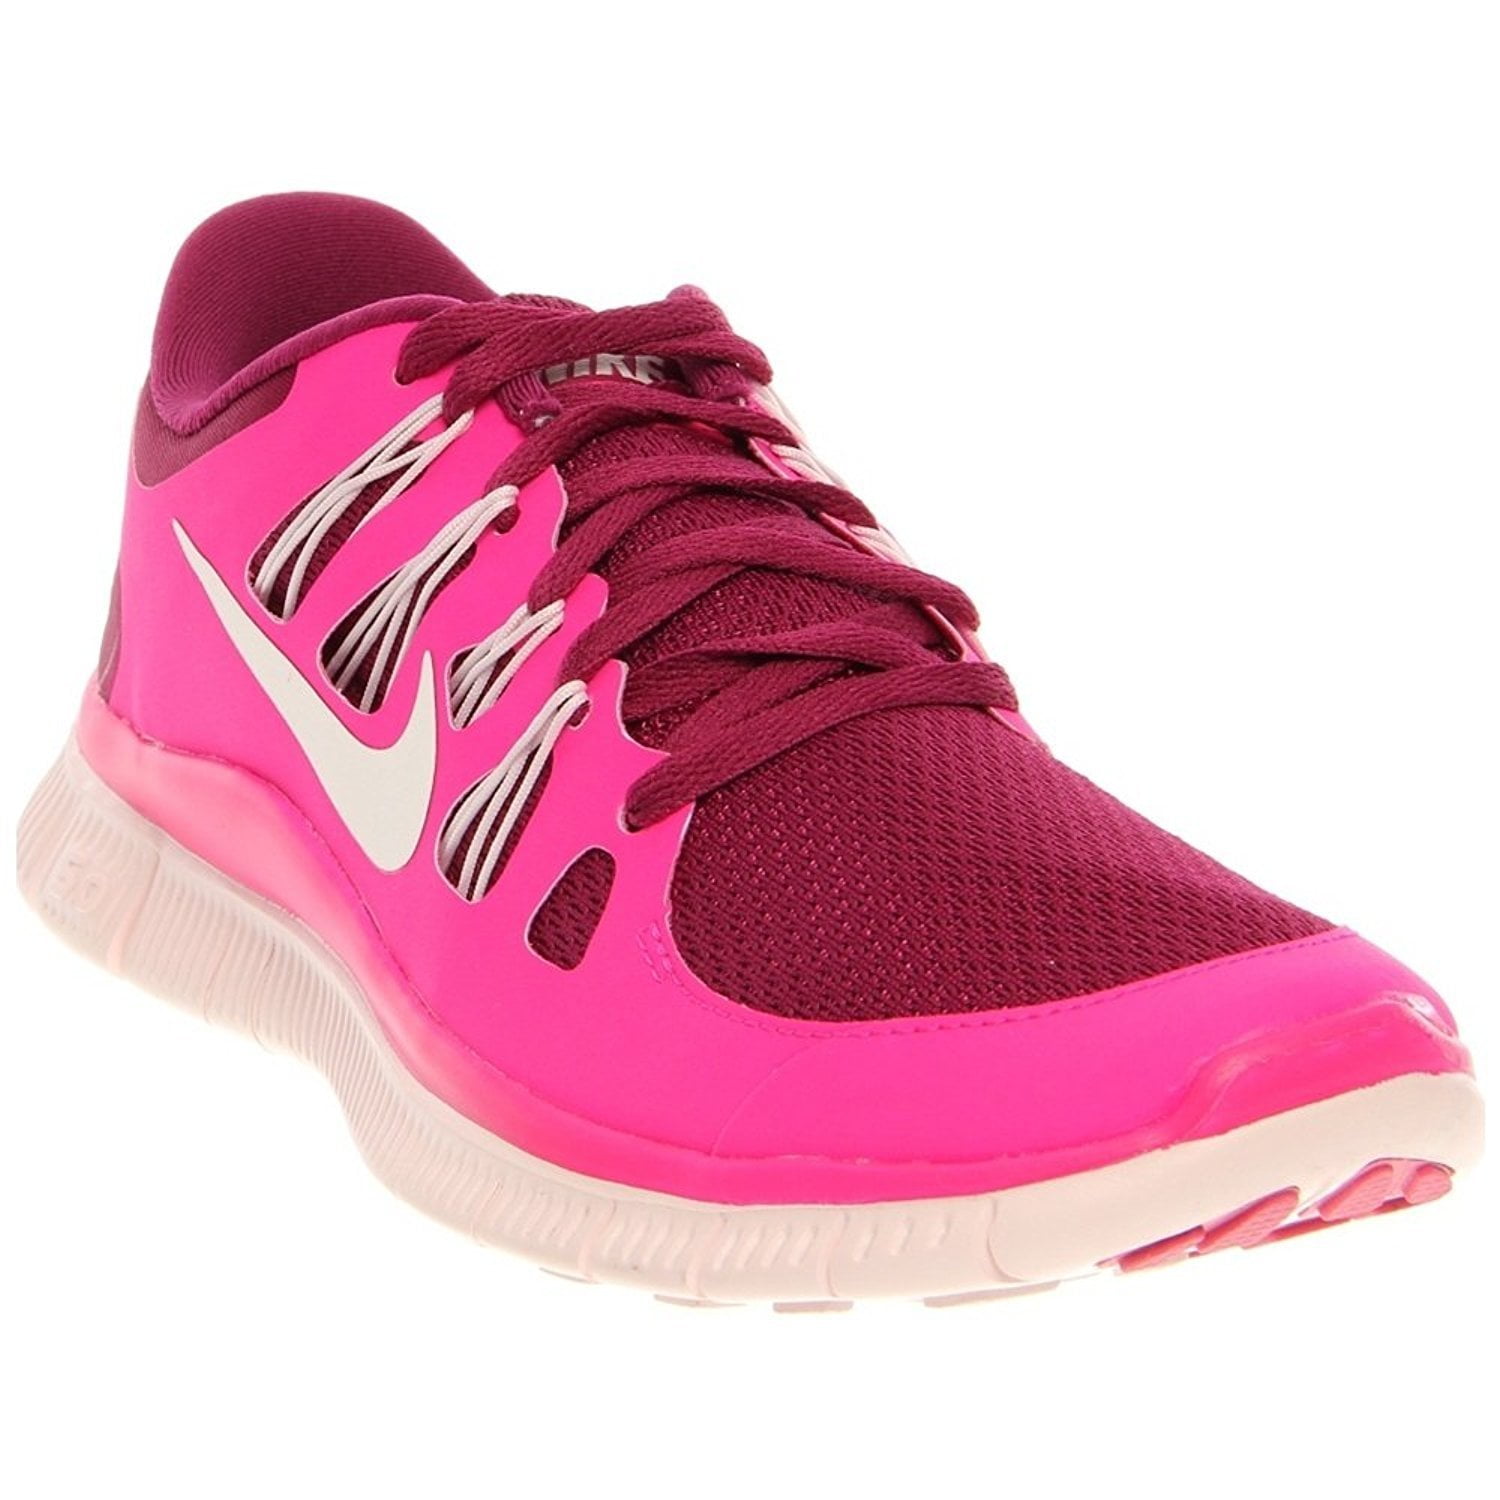 niet Stam auteursrechten Nike Lady Free 5.0+ Running Shoes - Walmart.com